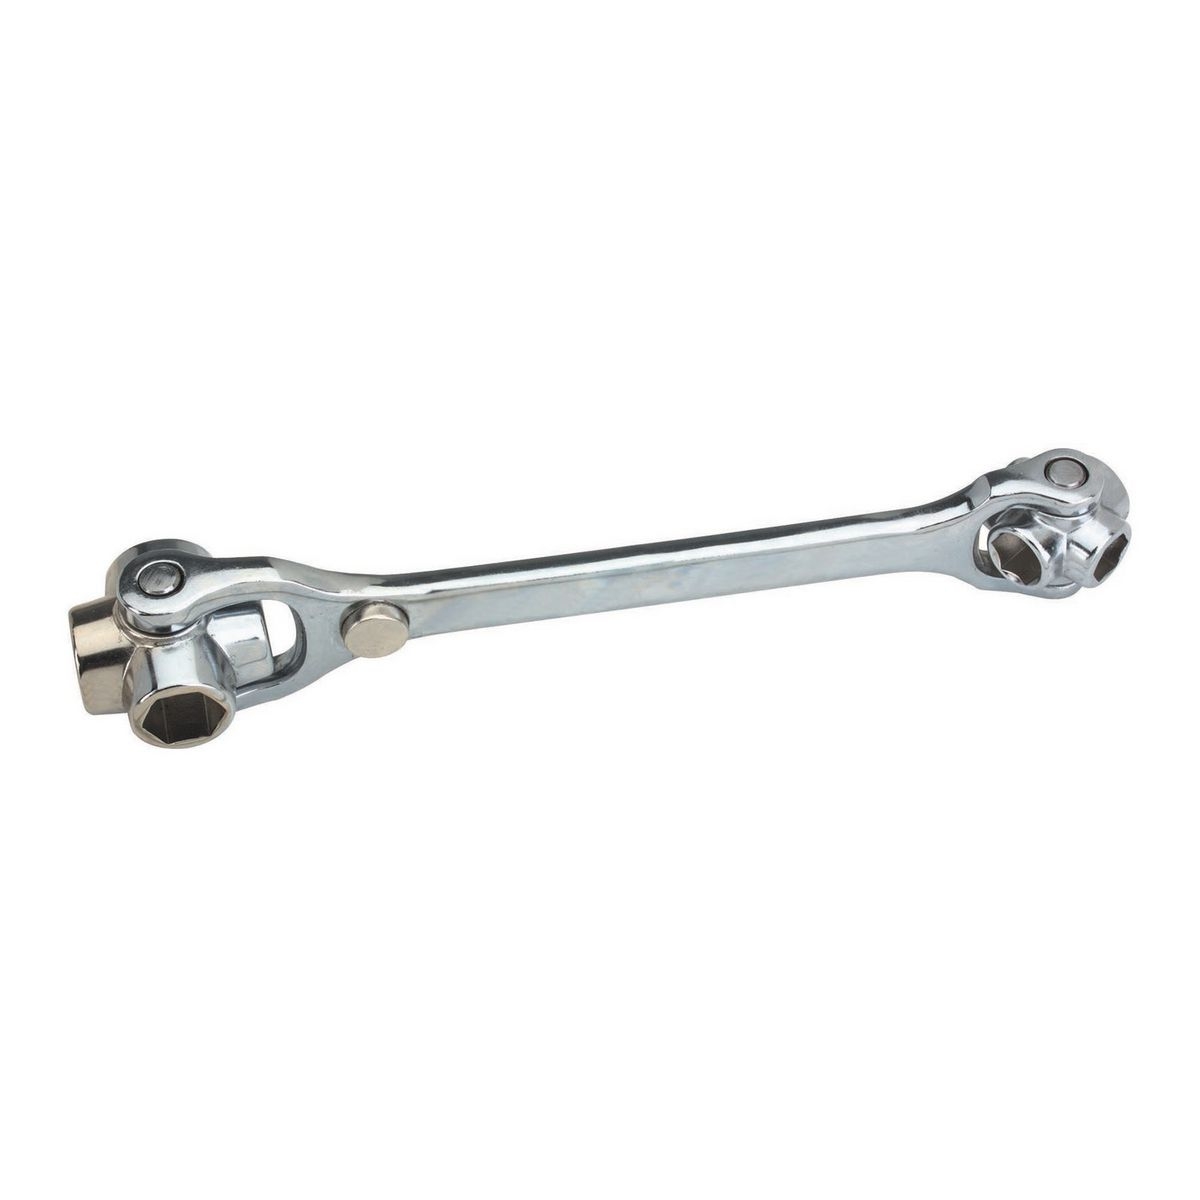 PITTSBURGH 8-In-1 Metric Socket Wrench - Item 65497 / 60829